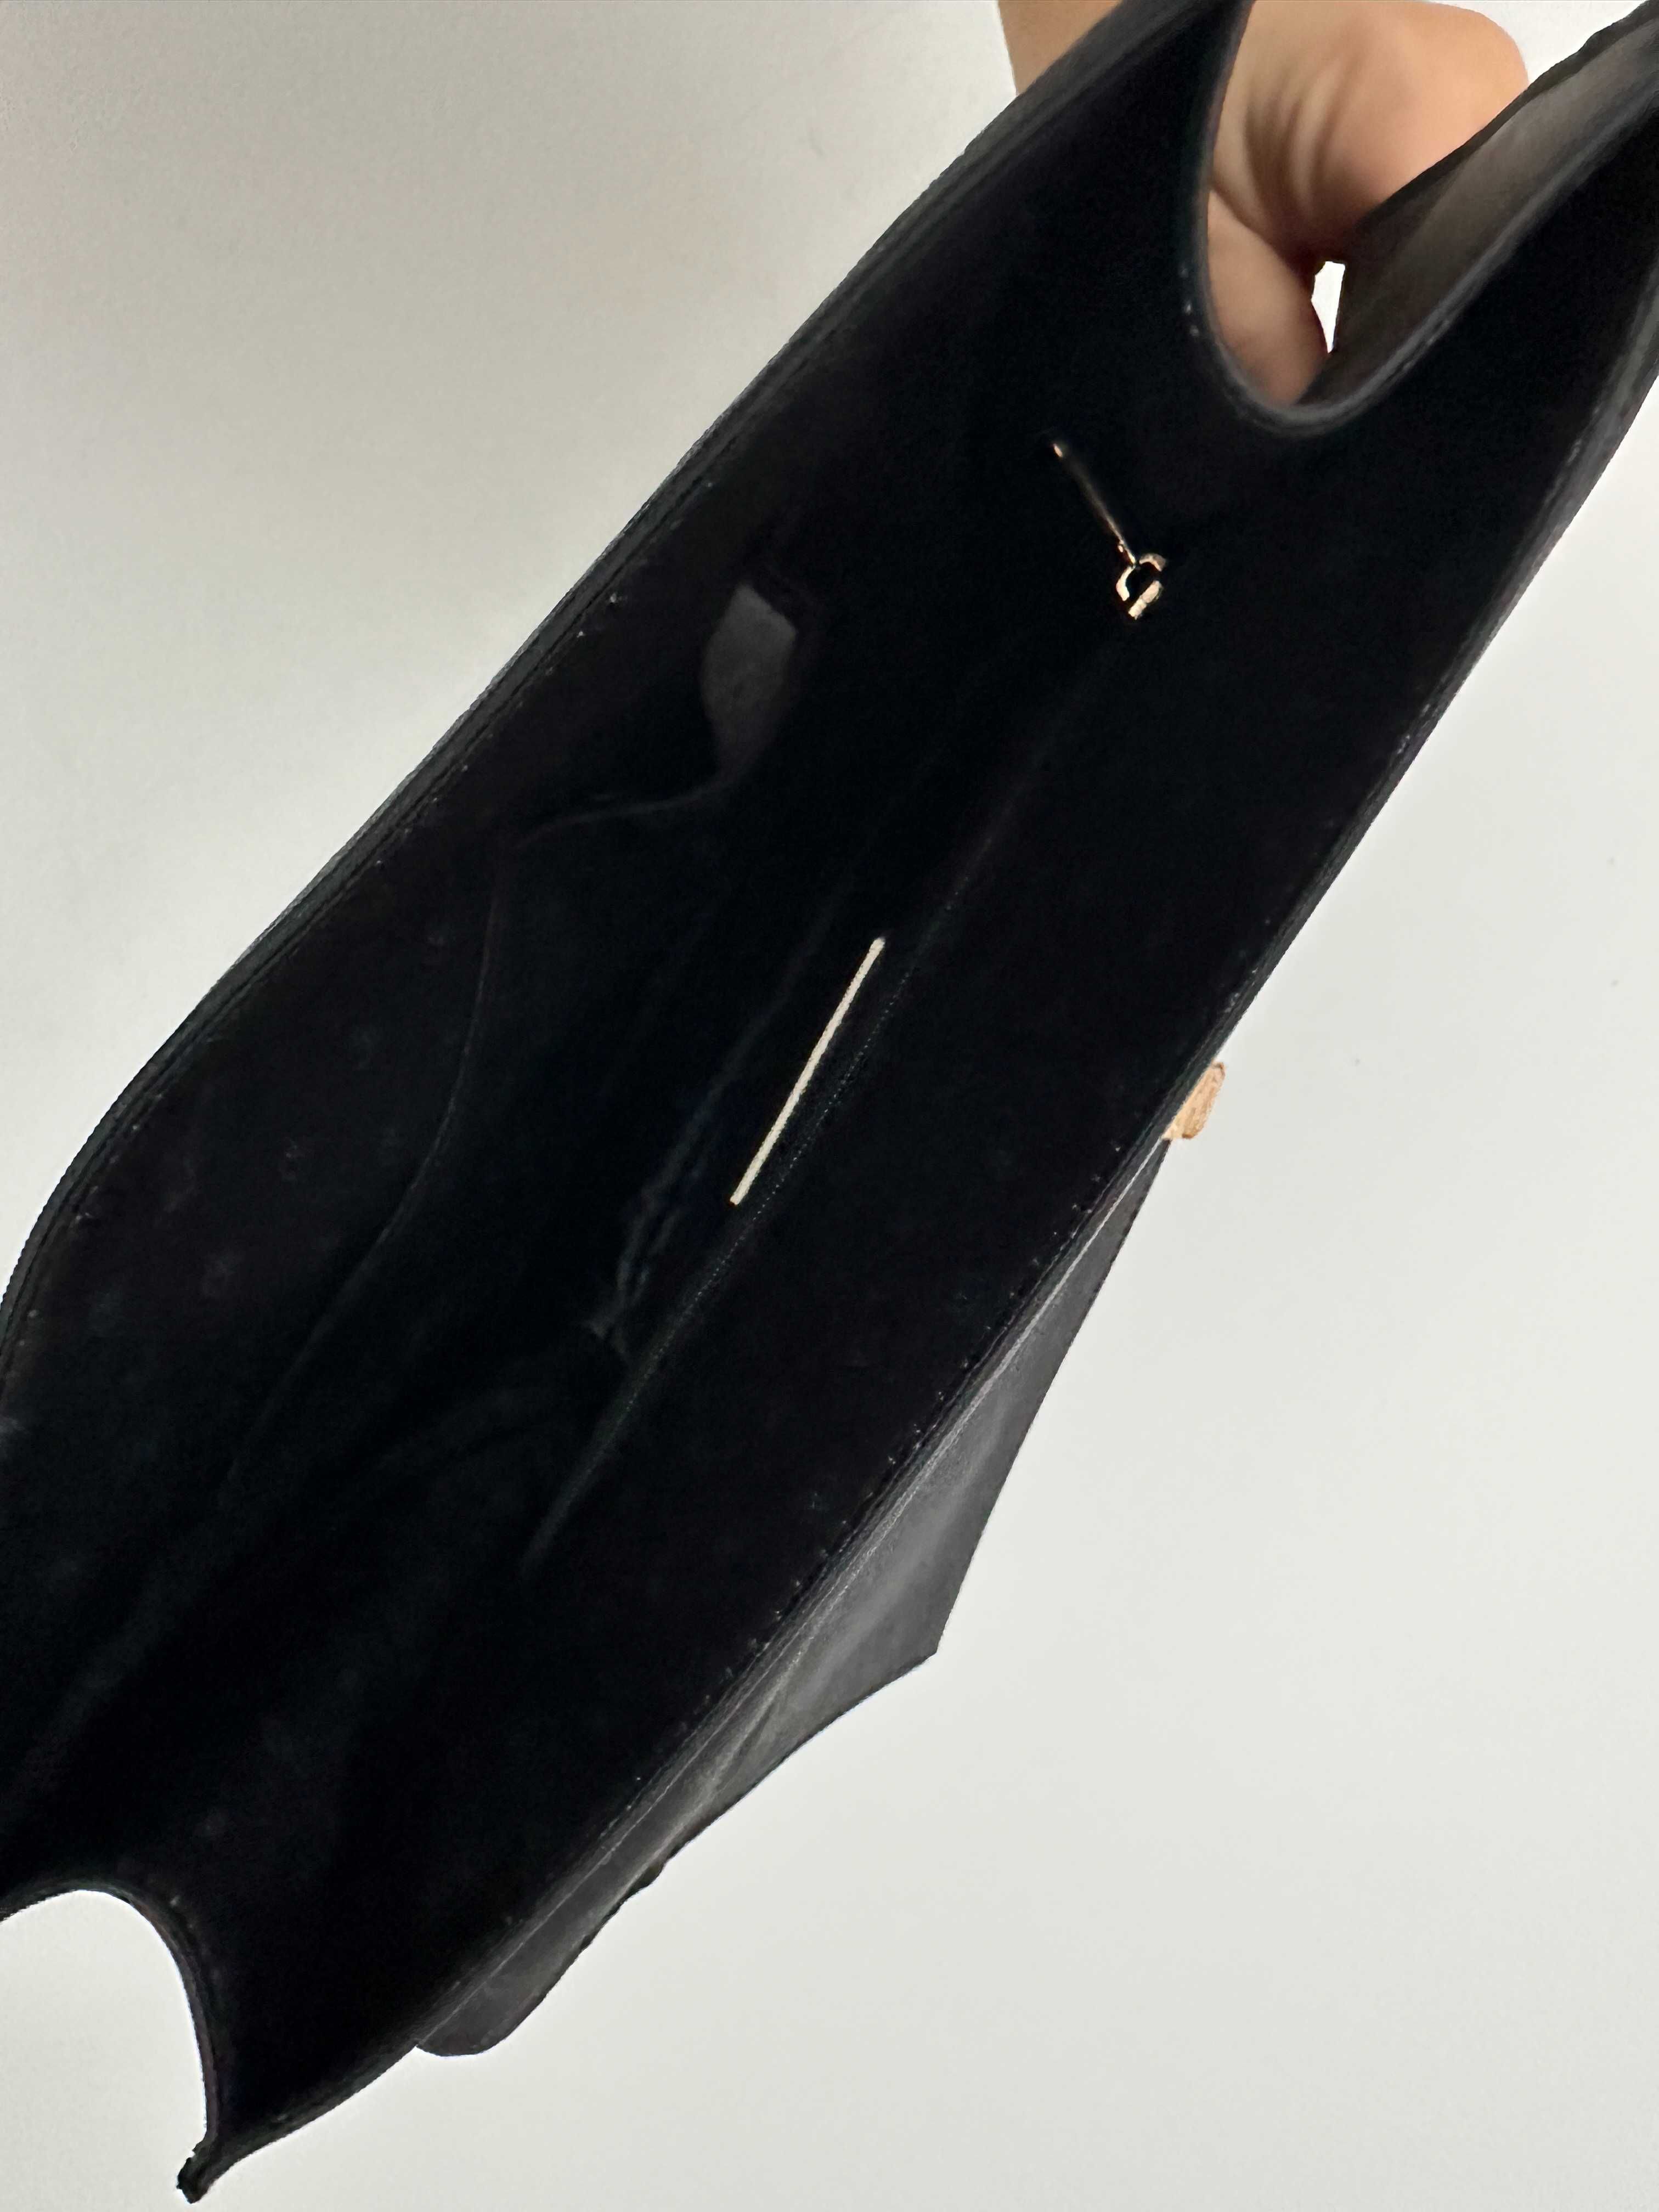 Nowa torebka damska czarna aktówka teczka na pasku elegancka